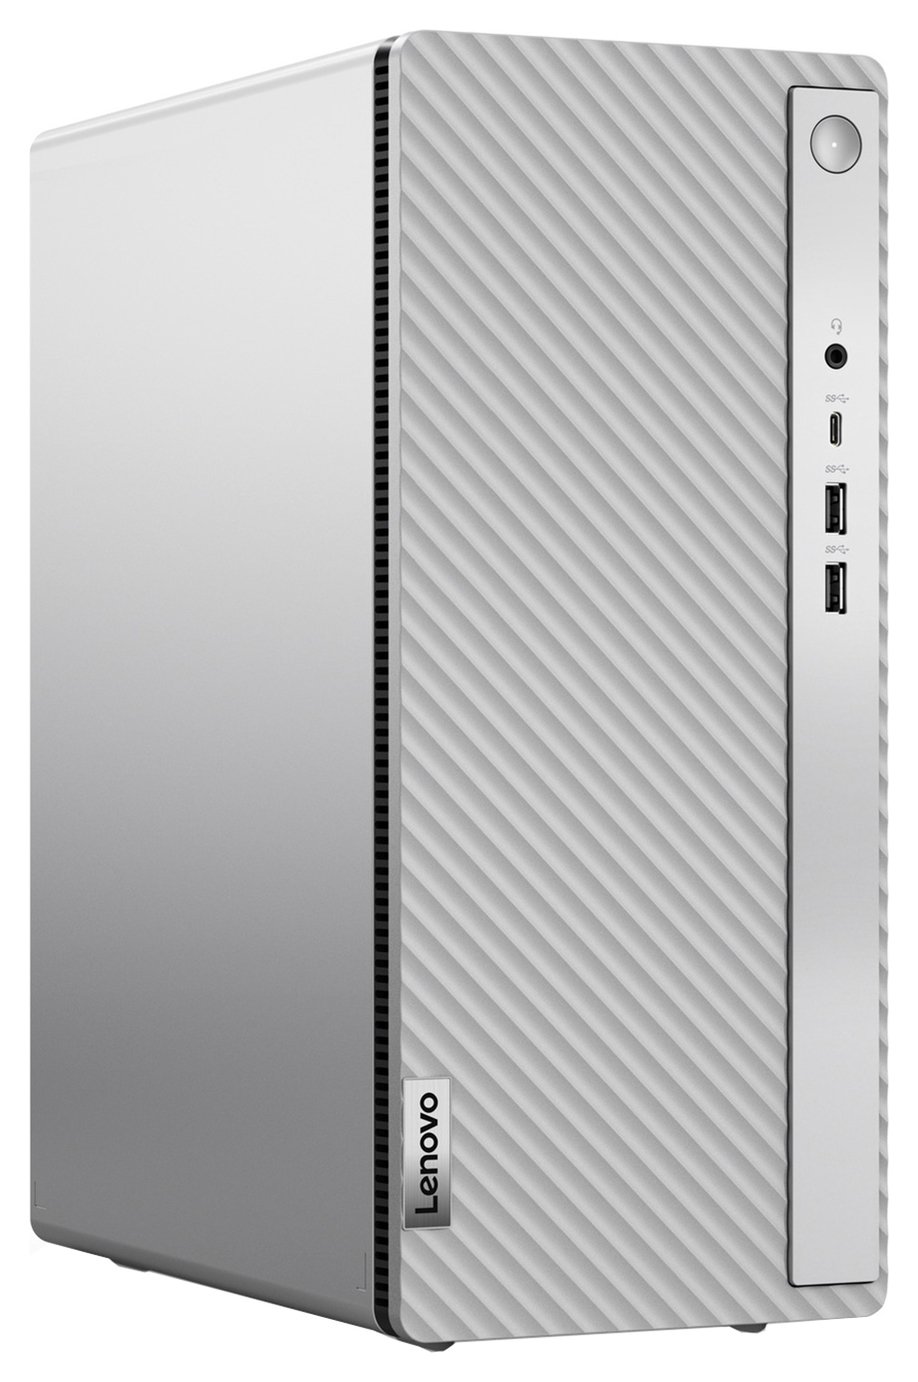 Lenovo IdeaCentre 5i i7 16GB 1TB Desktop PC